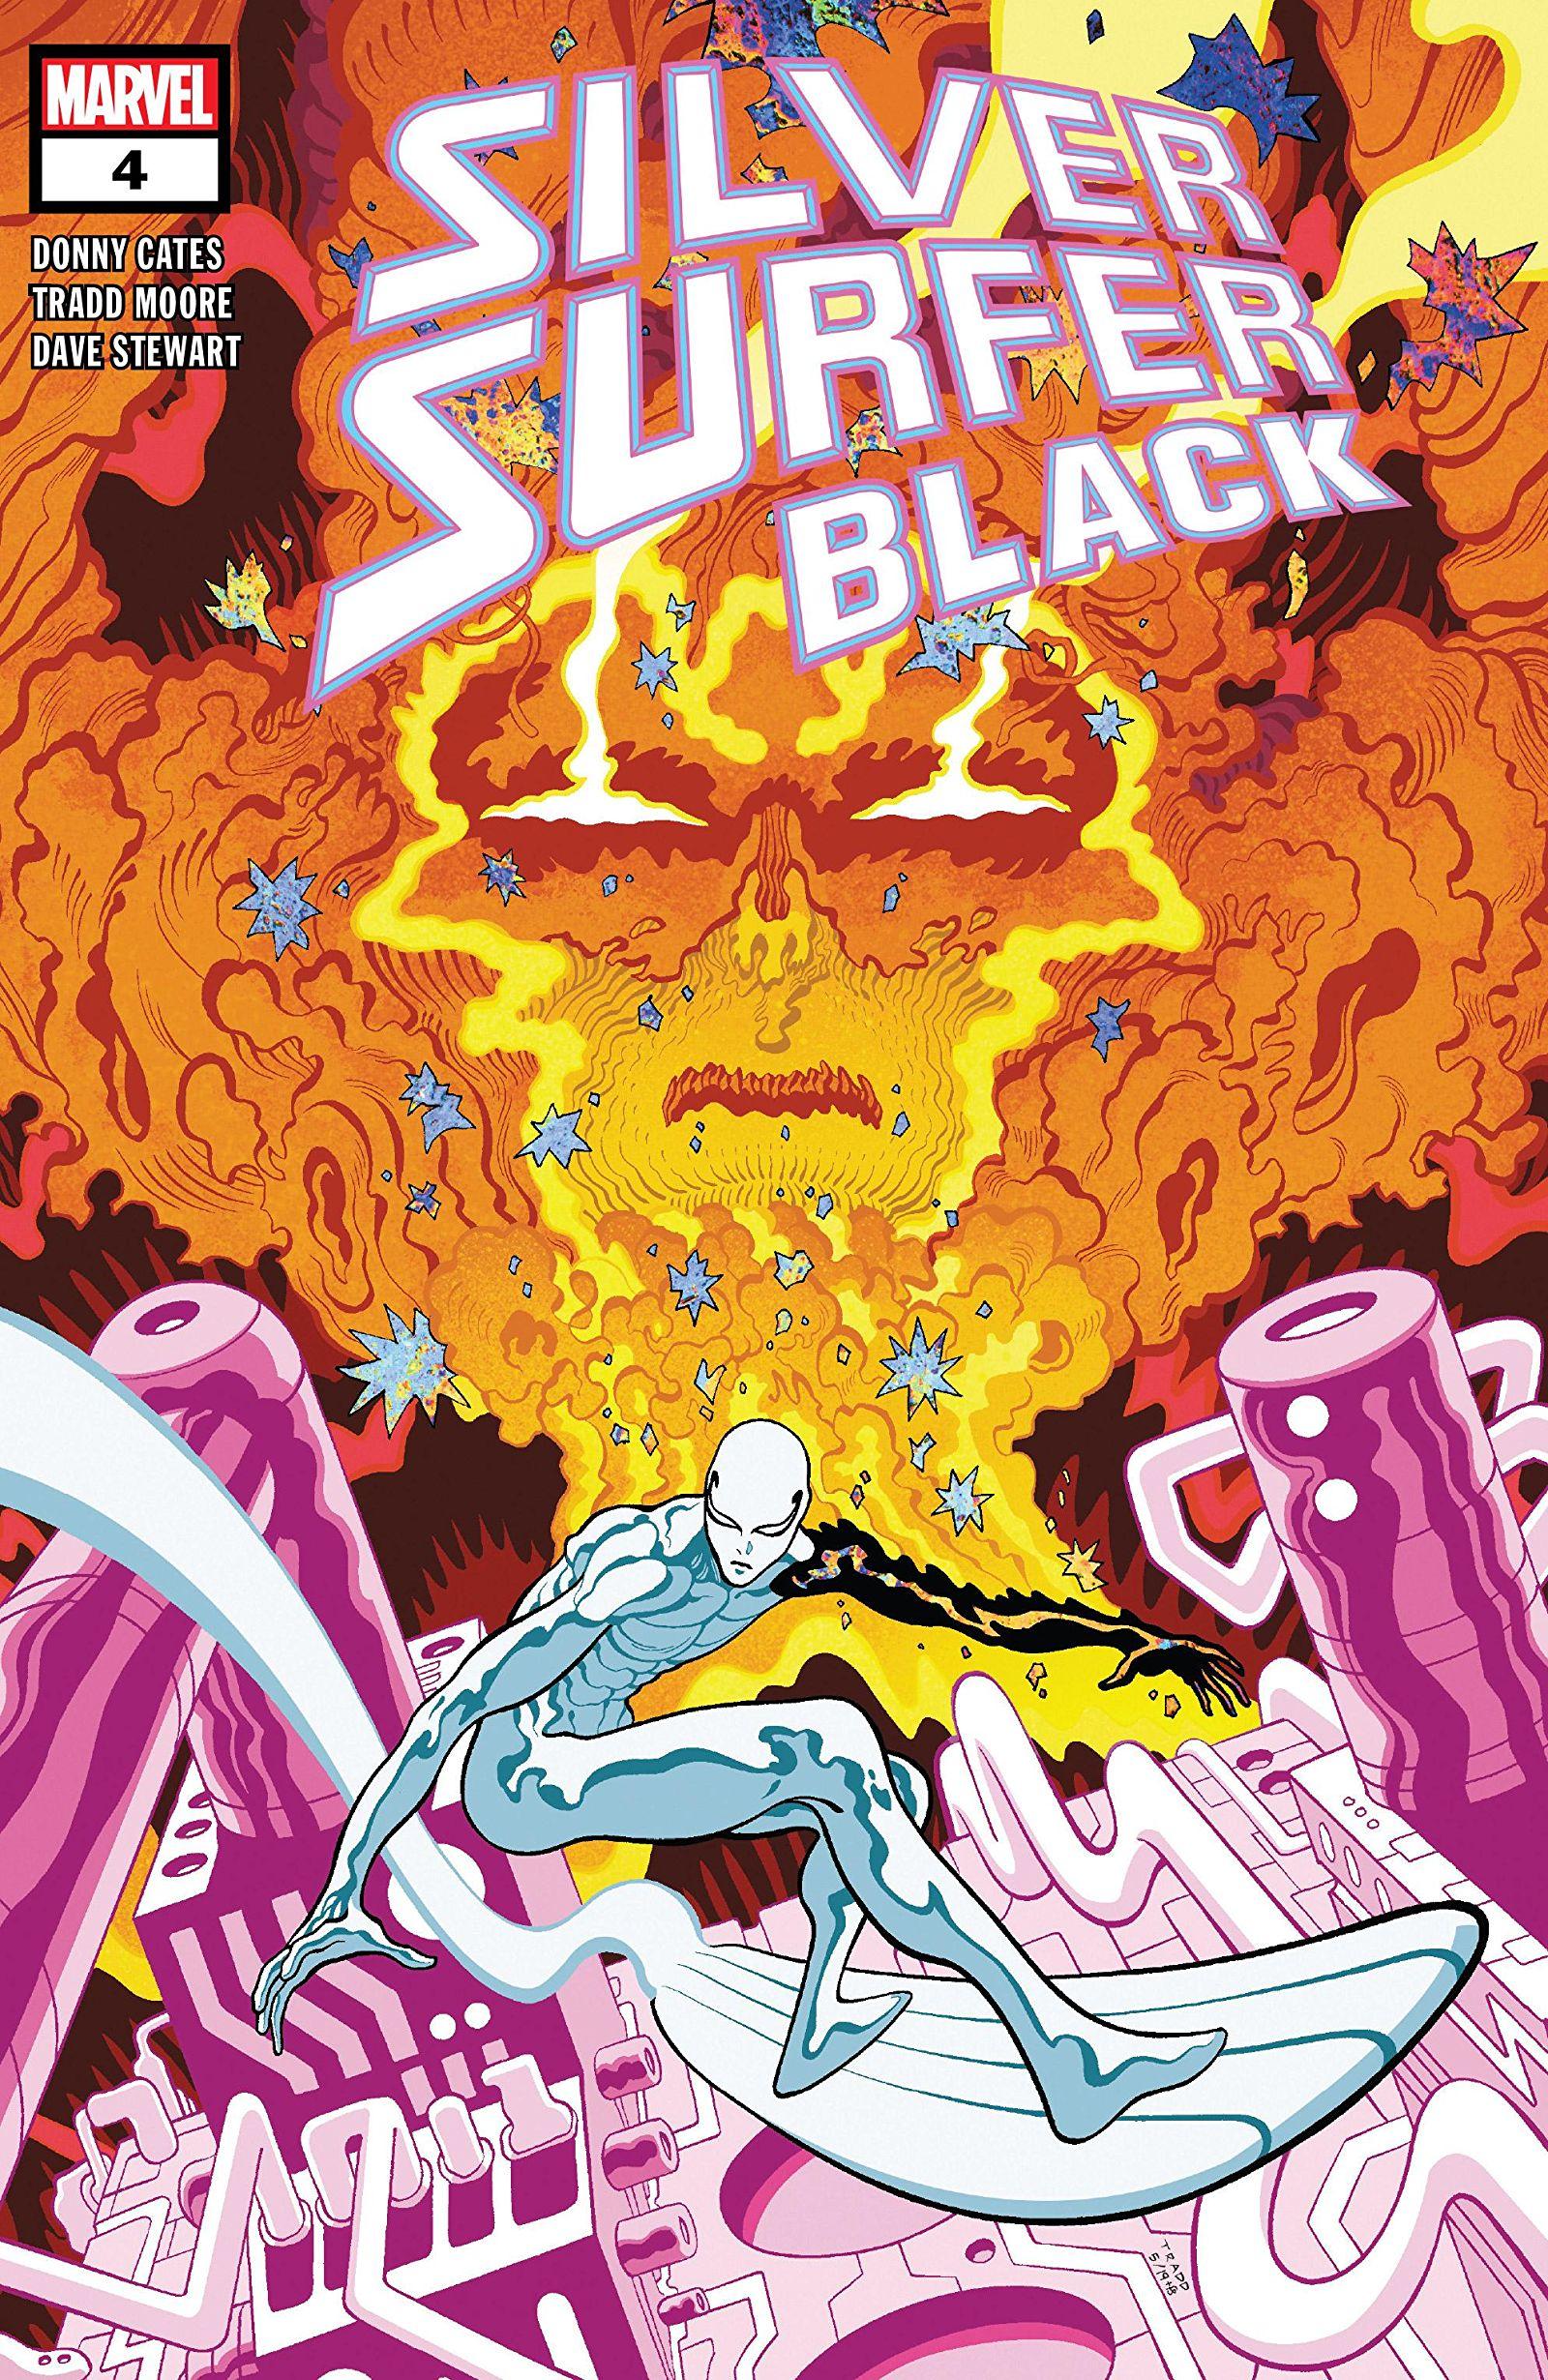 Silver Surfer: Black Vol. 1 #4